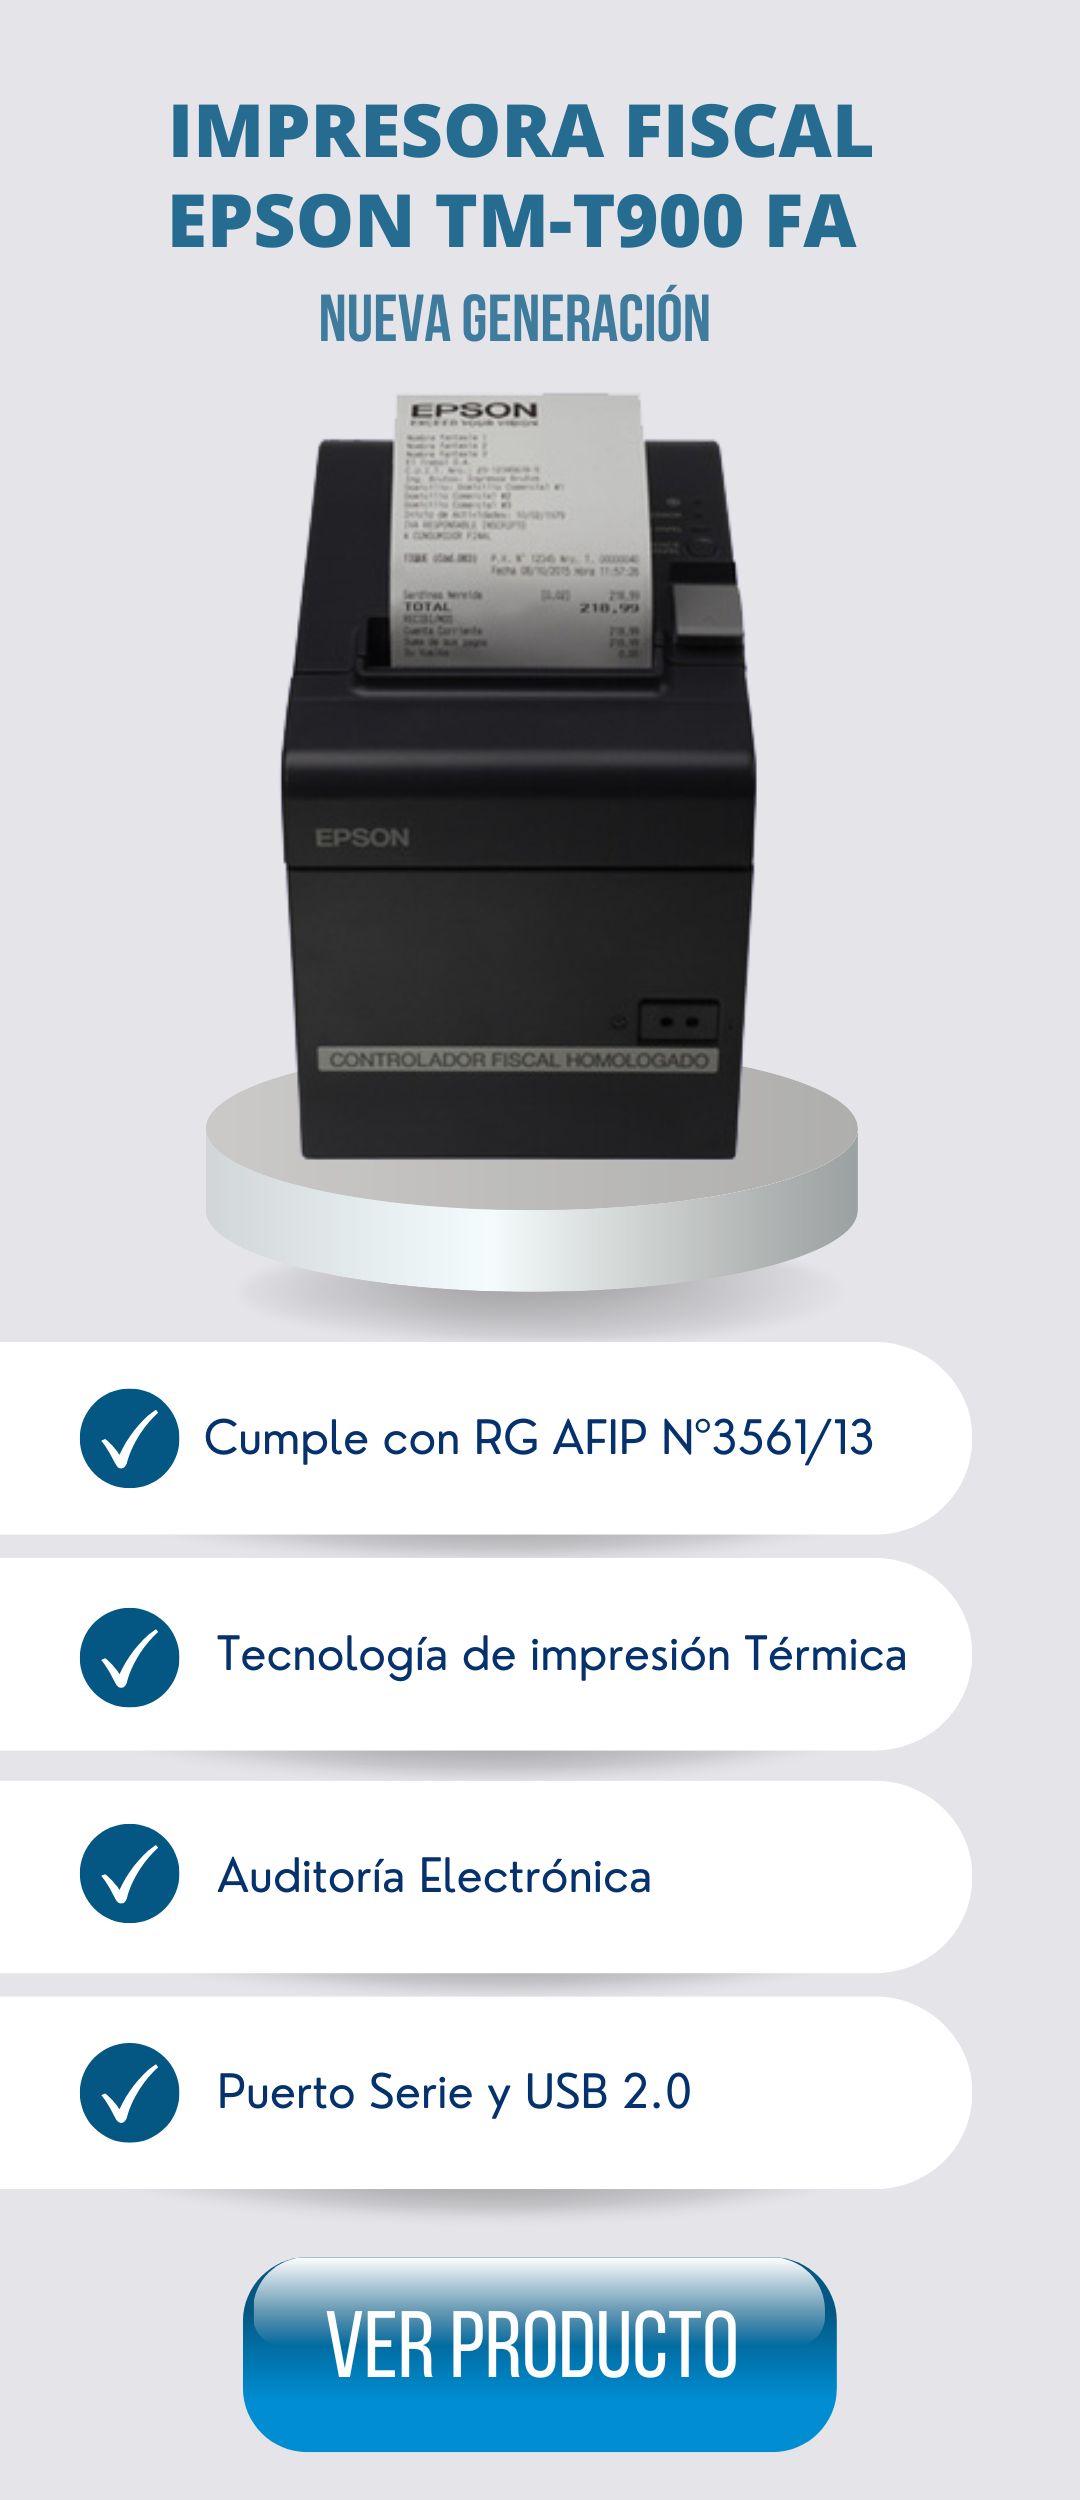 Impresora fiscal epson tmt900fa nueva generacion